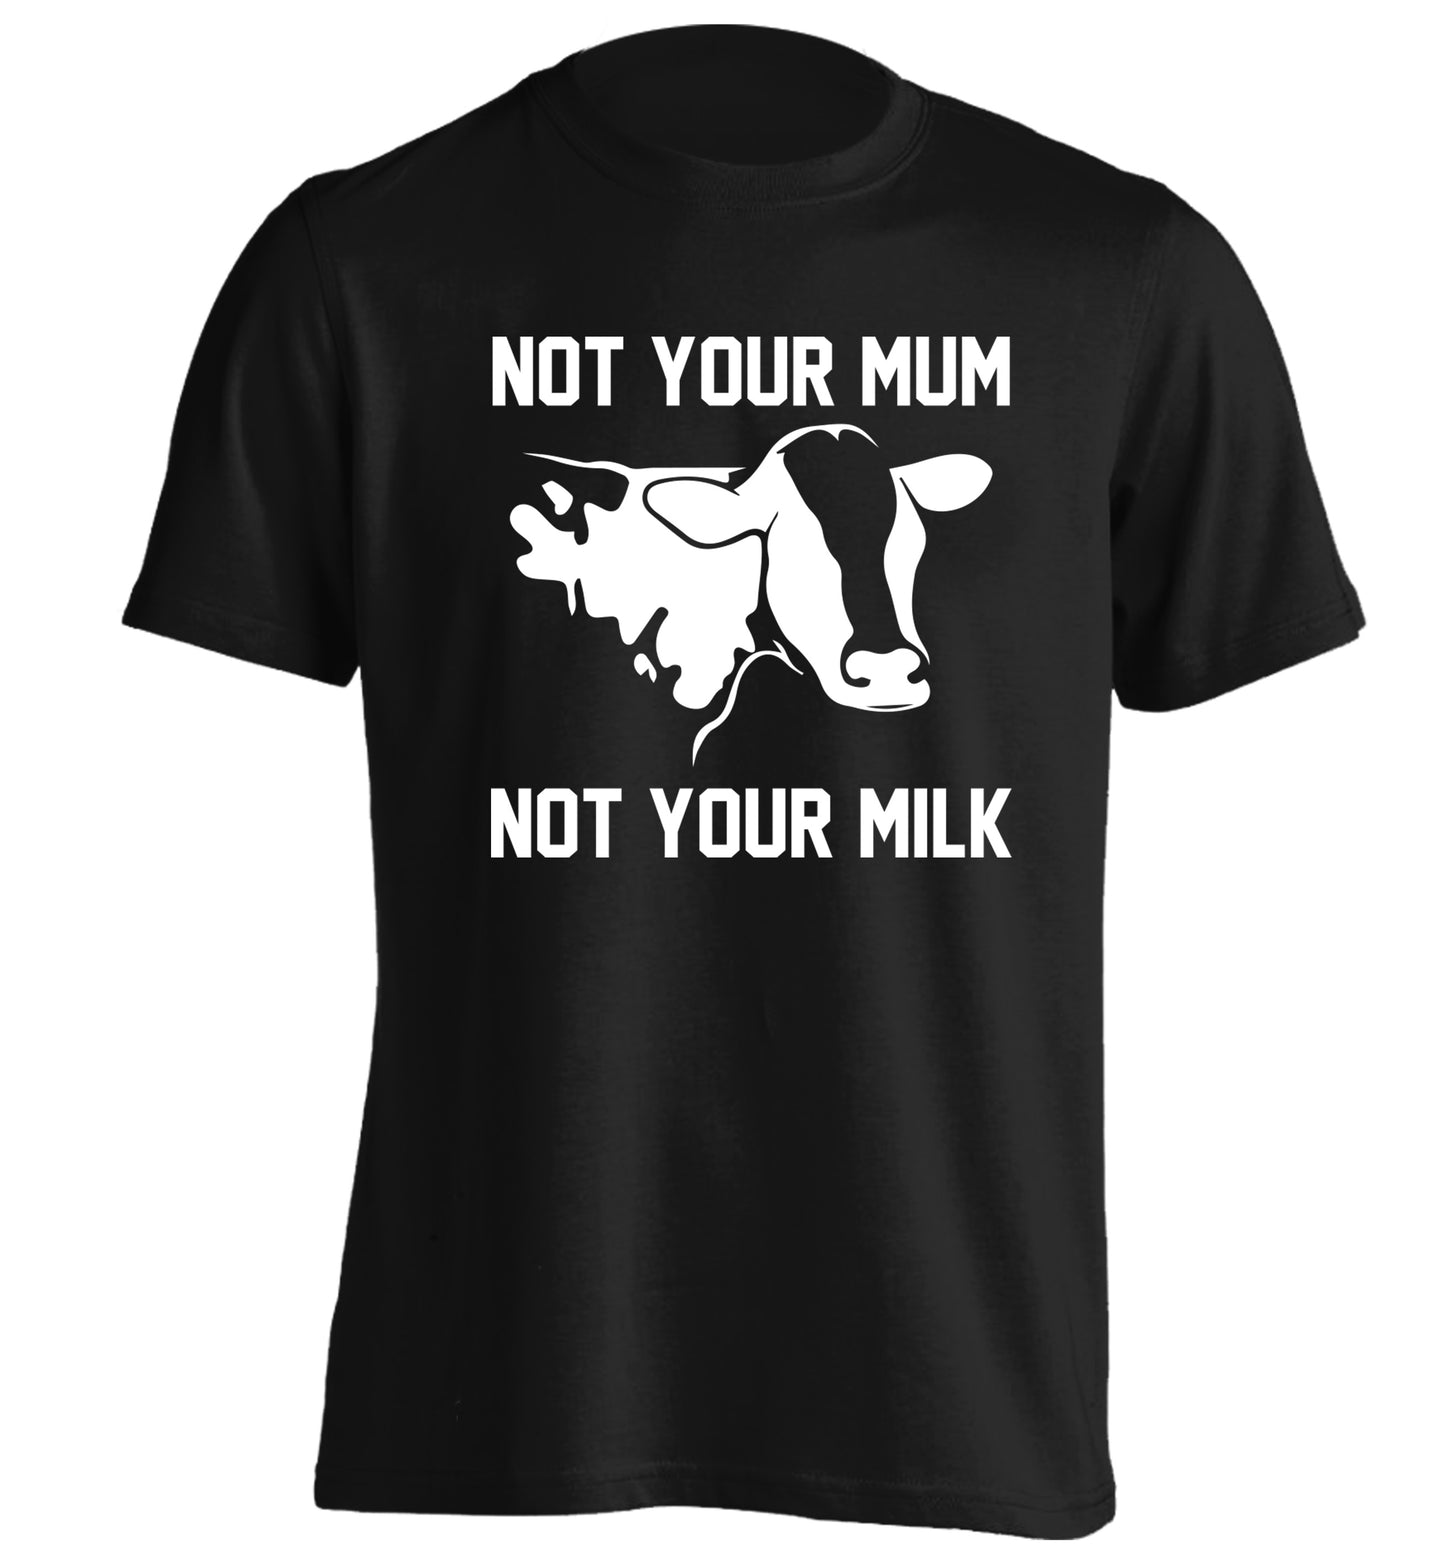 Not your mum not your milk adults unisex black Tshirt 2XL